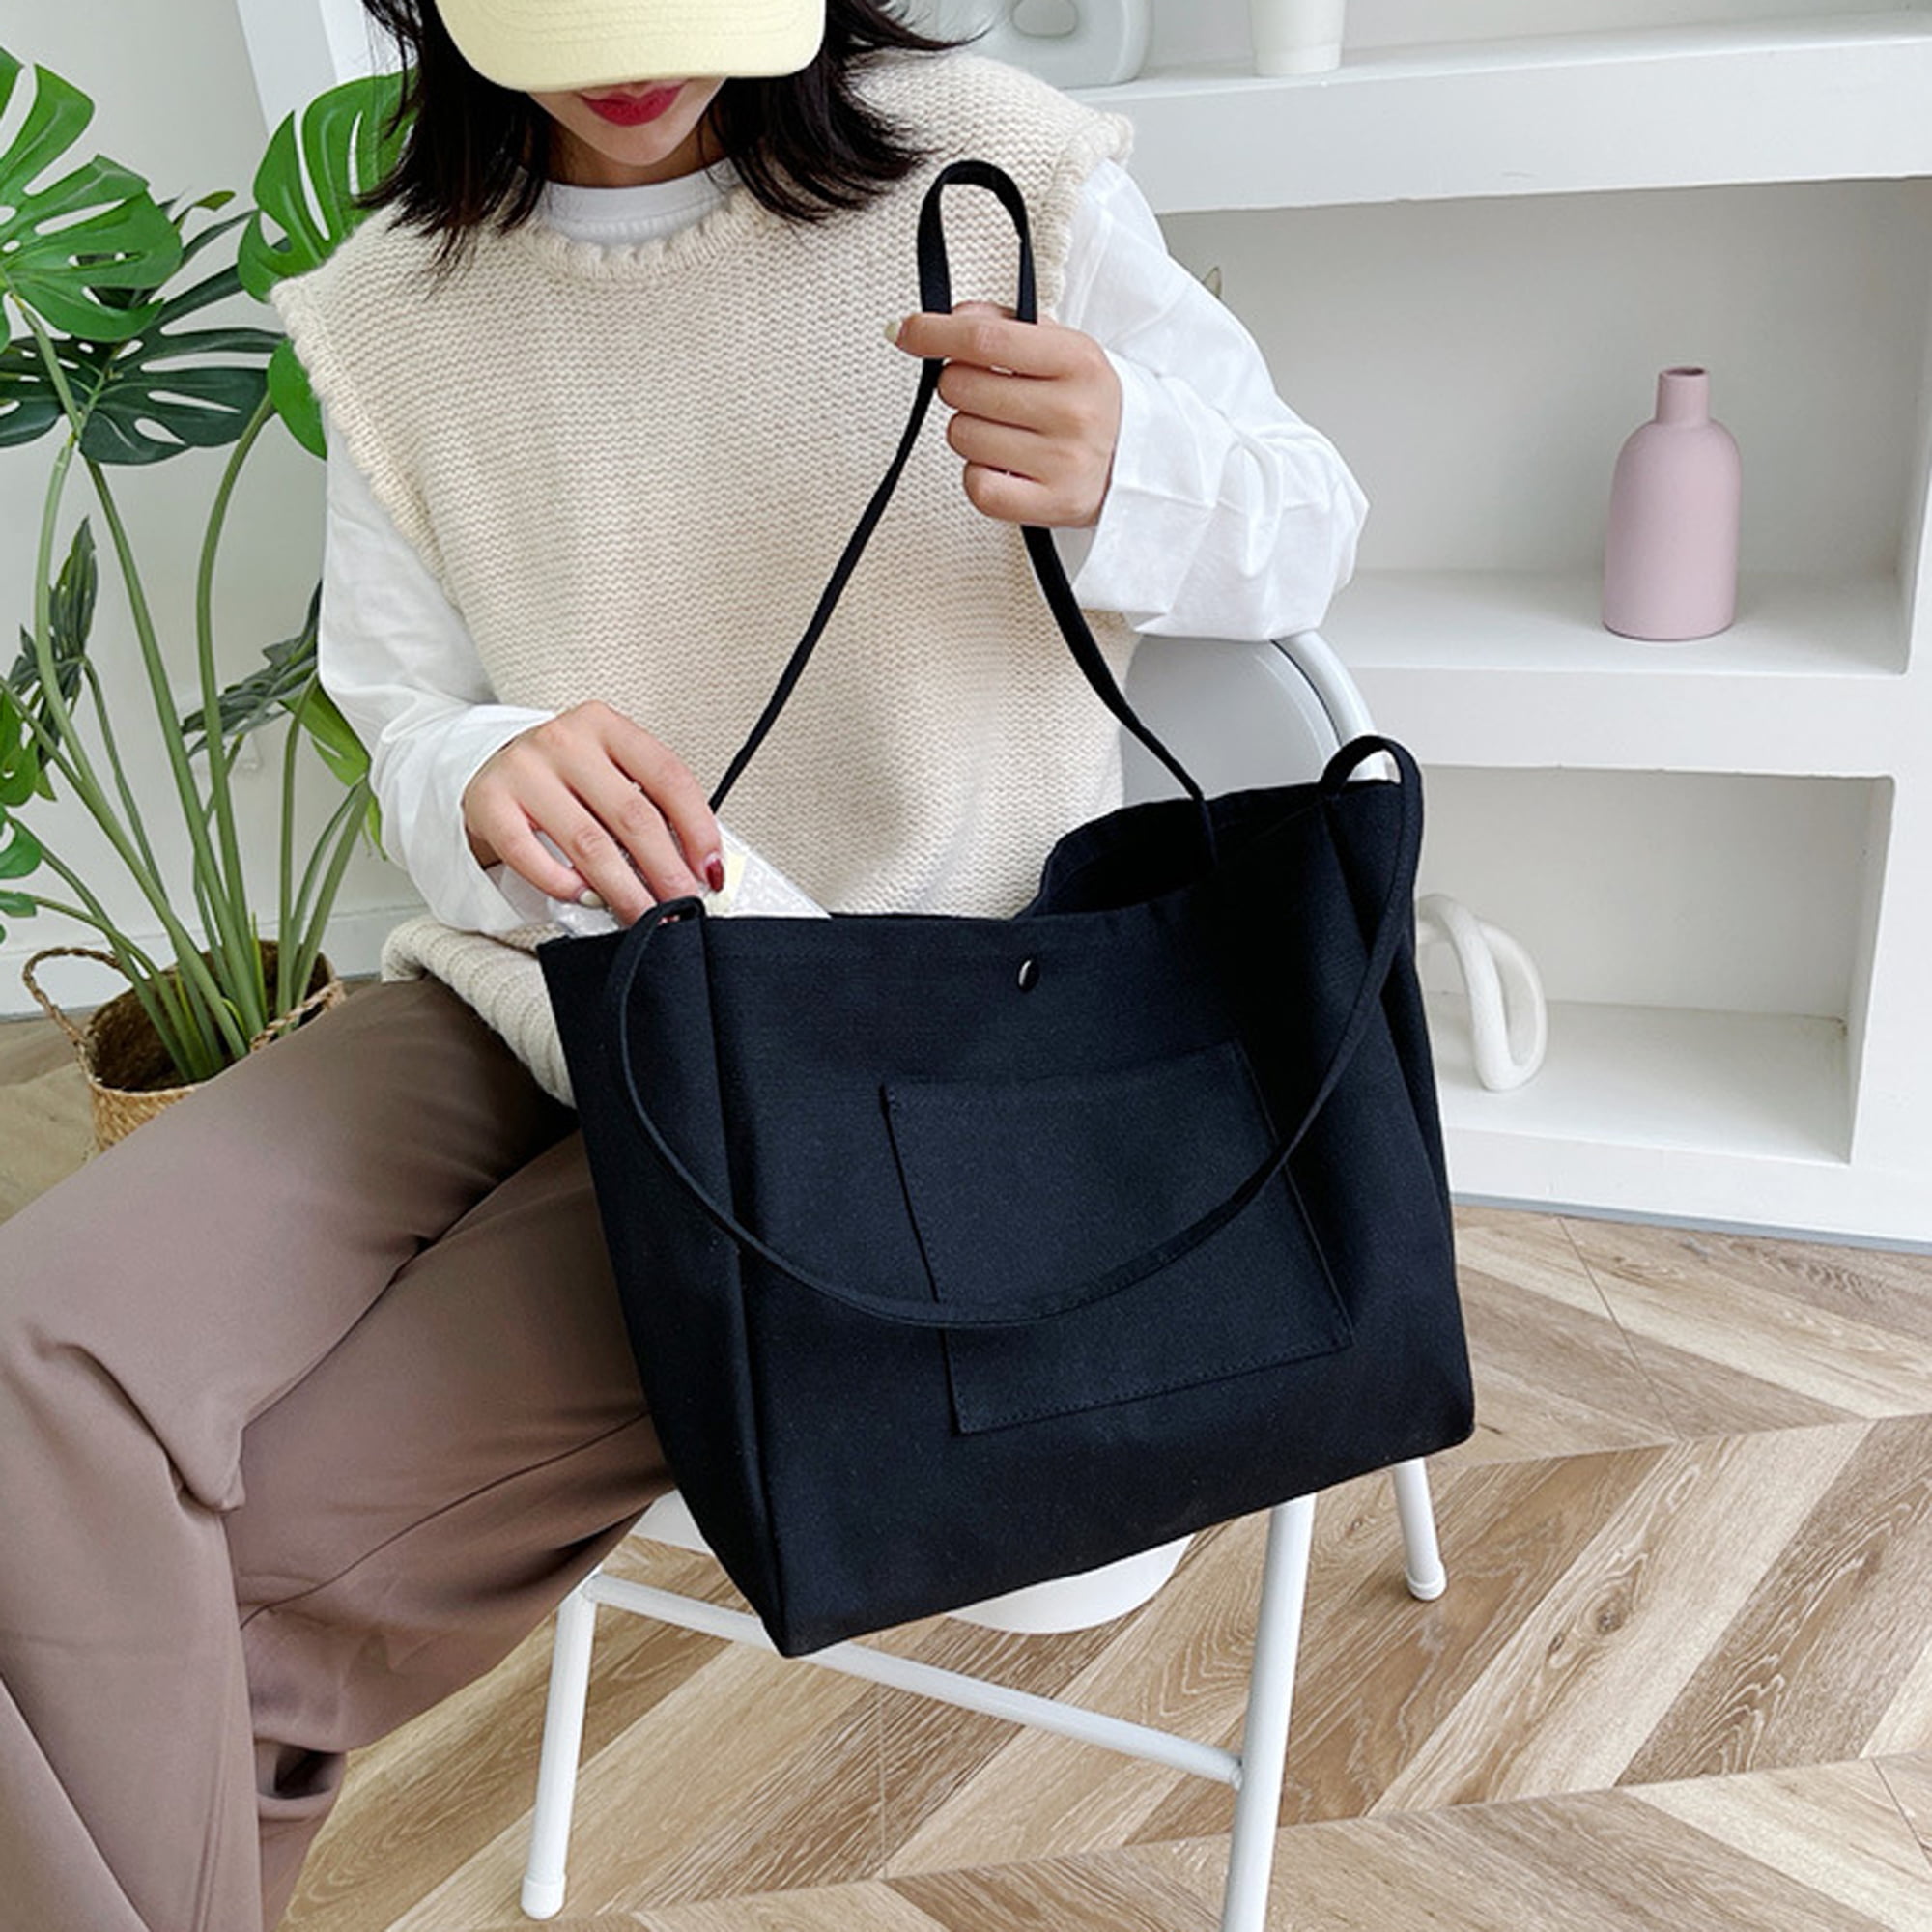 Fashion Extra Large Capacity Lightweight Canvas Bag Shoulder Bag Shopping Handbags  Bag for Women Ladies School Work College Travel, Black 